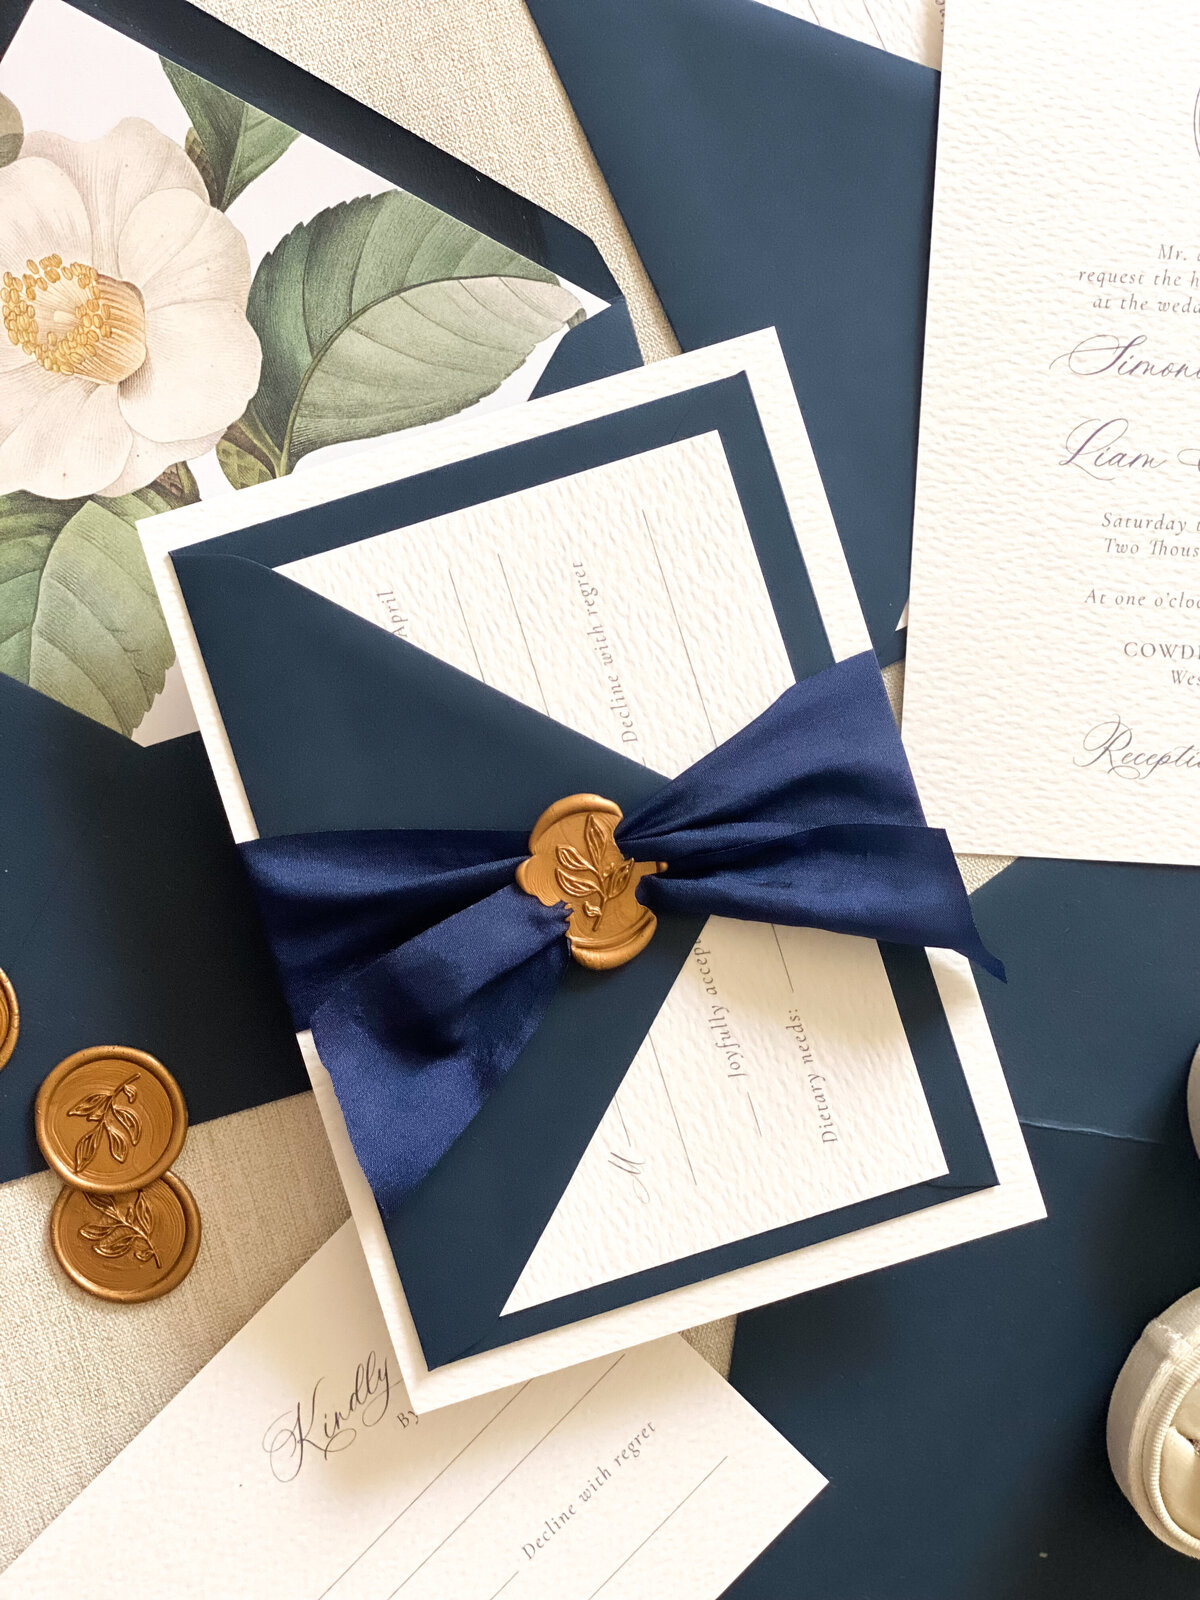 Wax seal and ribbon on invitations